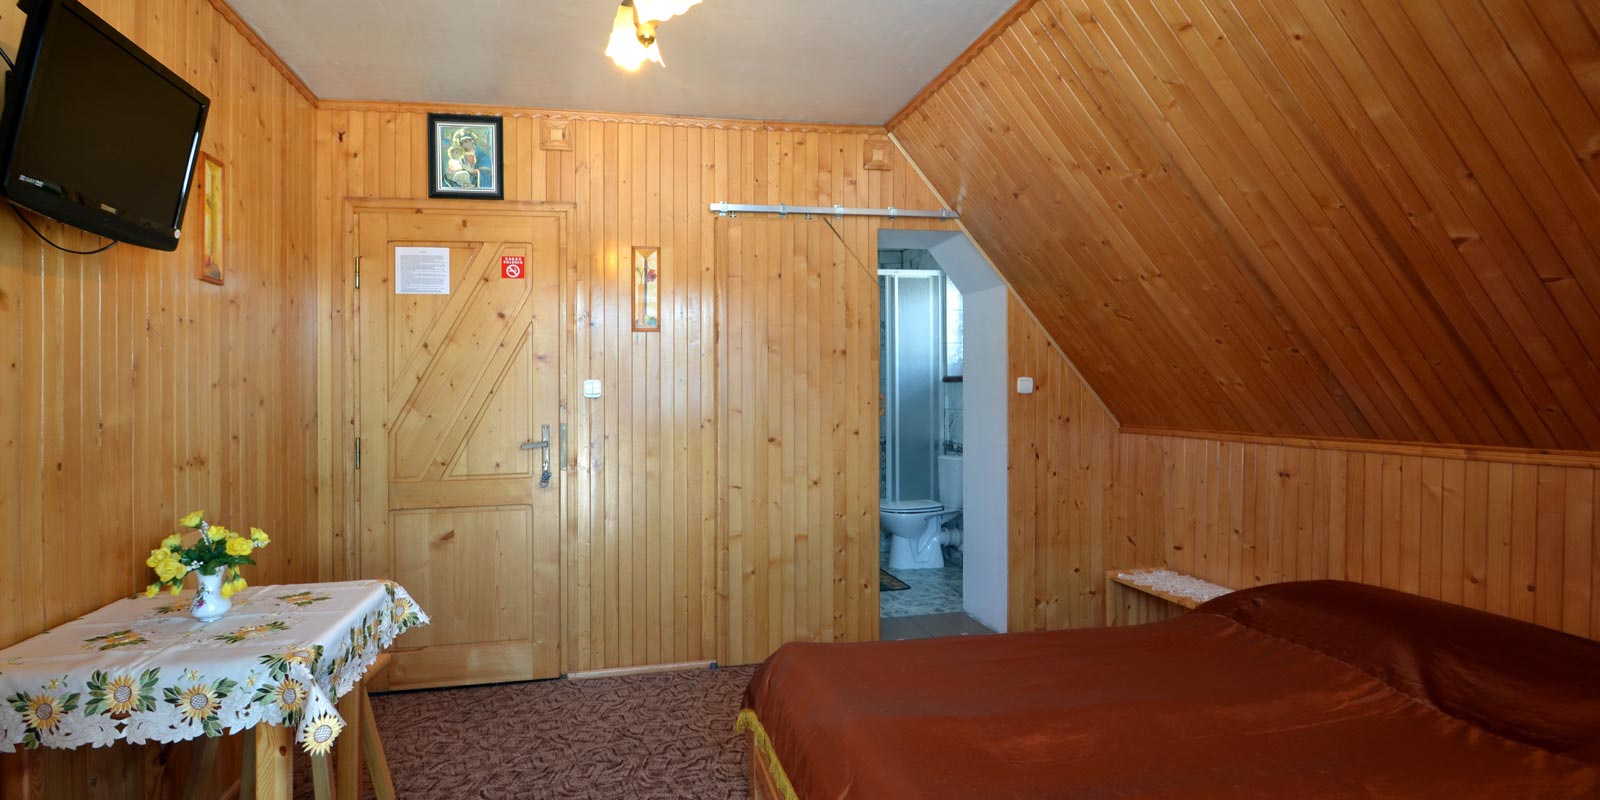 U LISA villa in Zakopane rooms for rent Poland Tatra Mountains 05